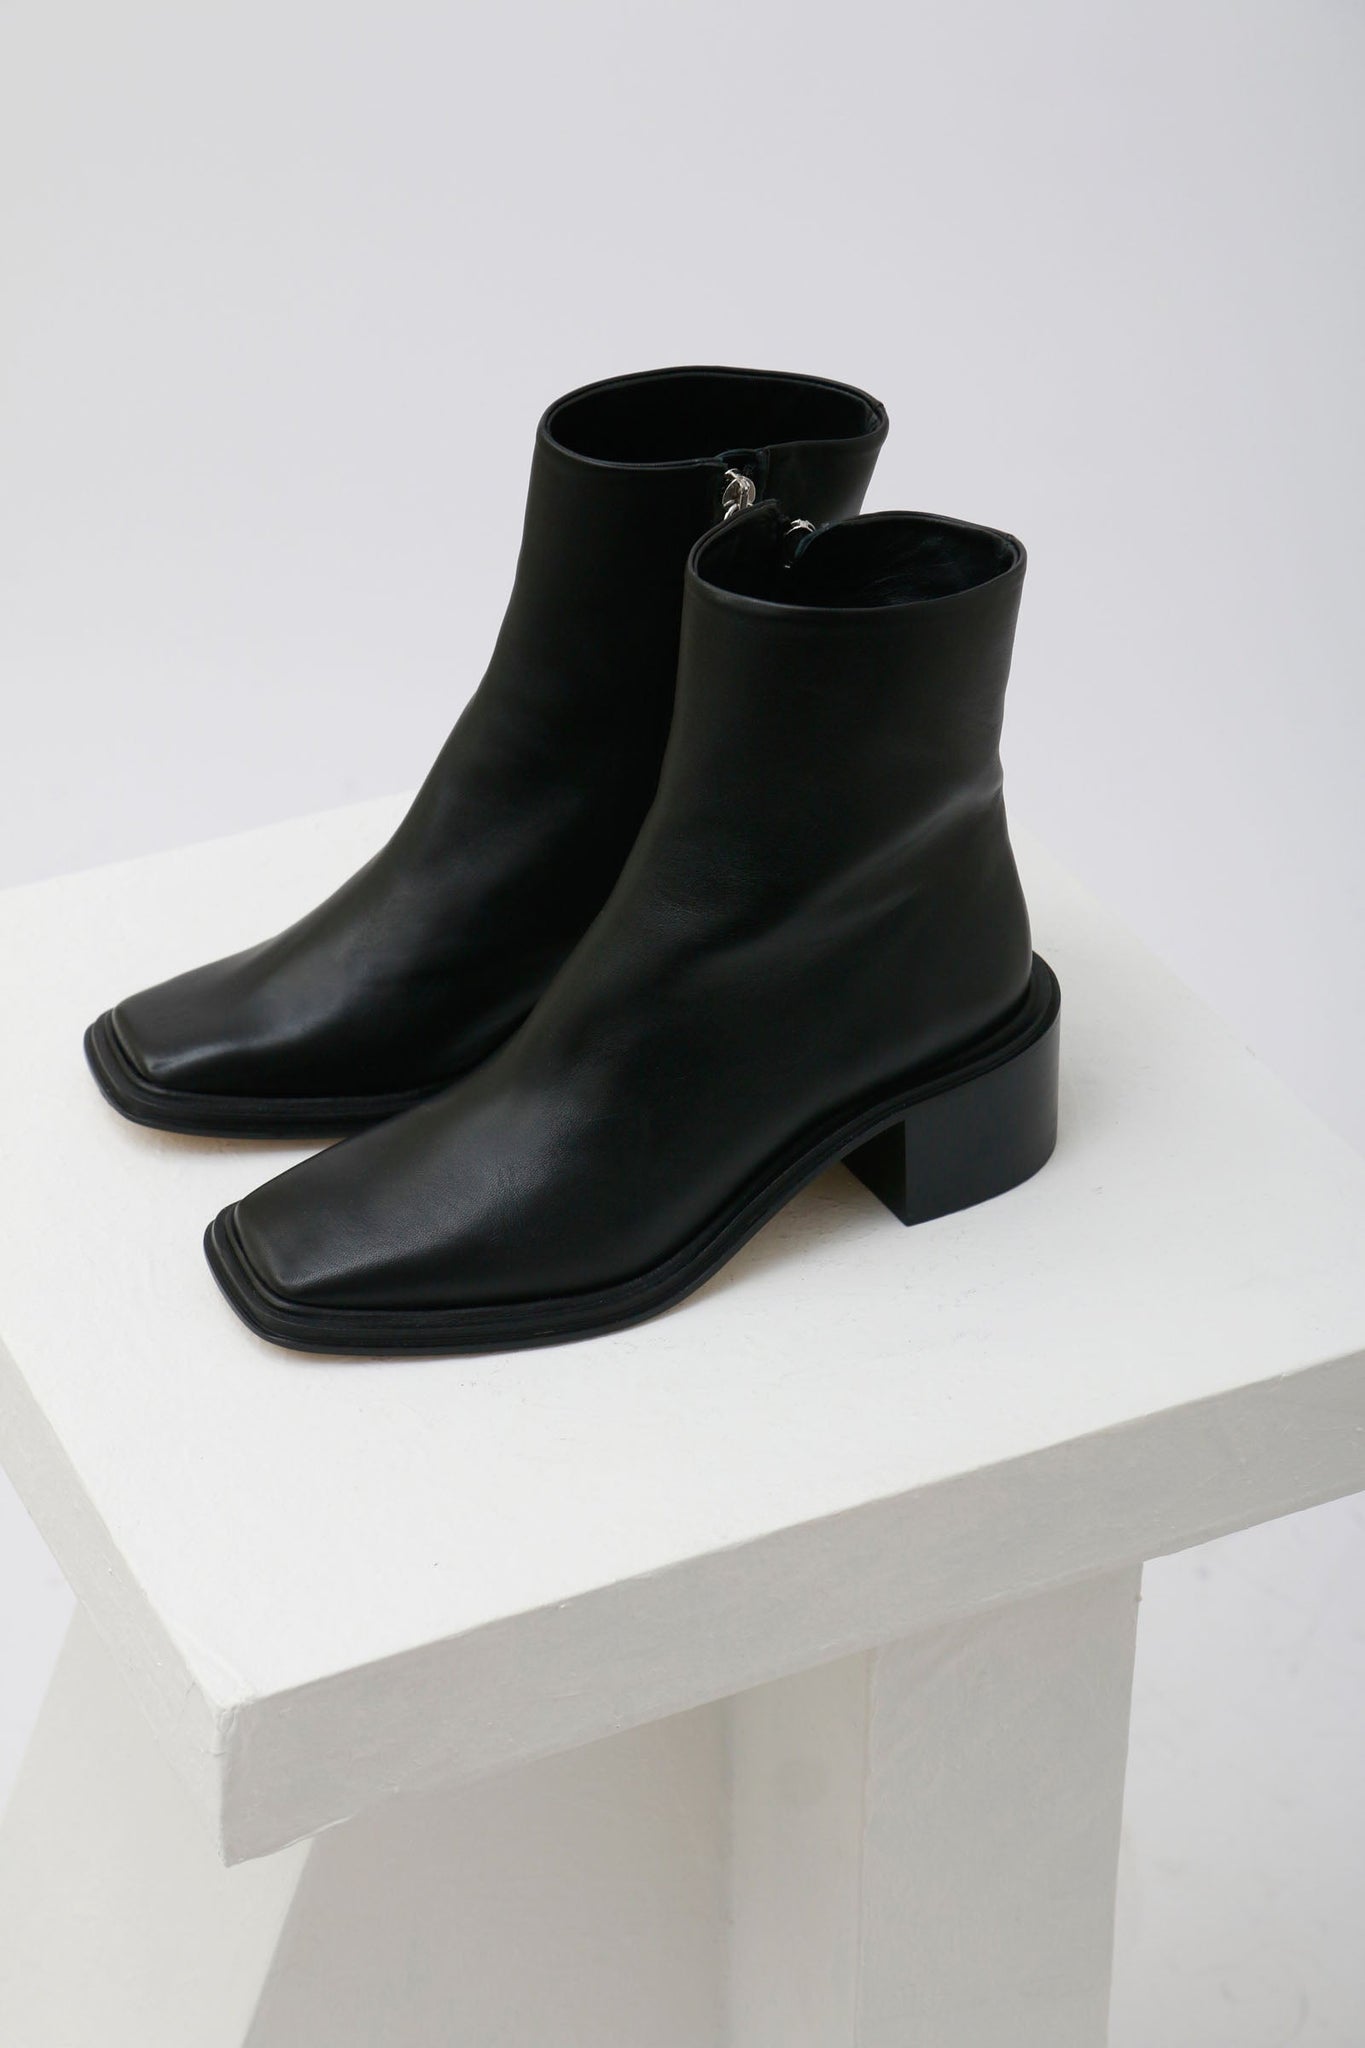 Souliers Martinez Shoes AURIA - Black Leather Ankle Boots 